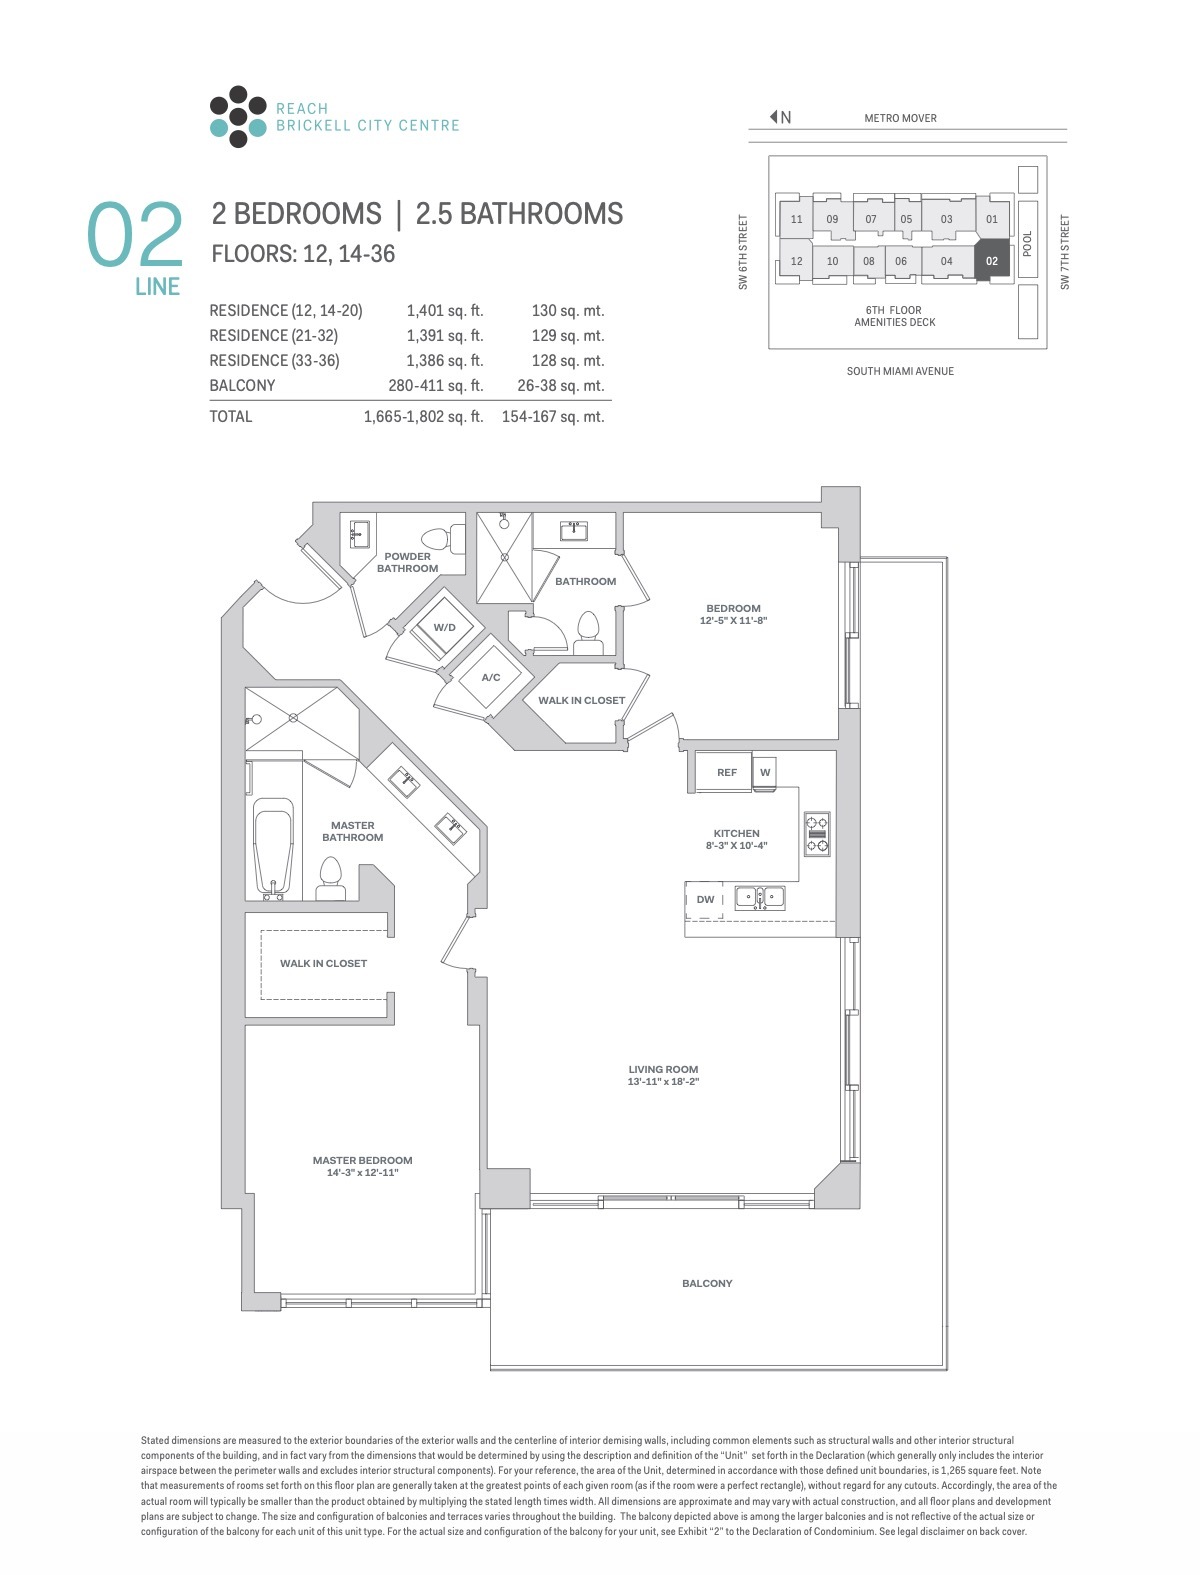 Floor Plan for Reach Brickell City Centre, Line 02